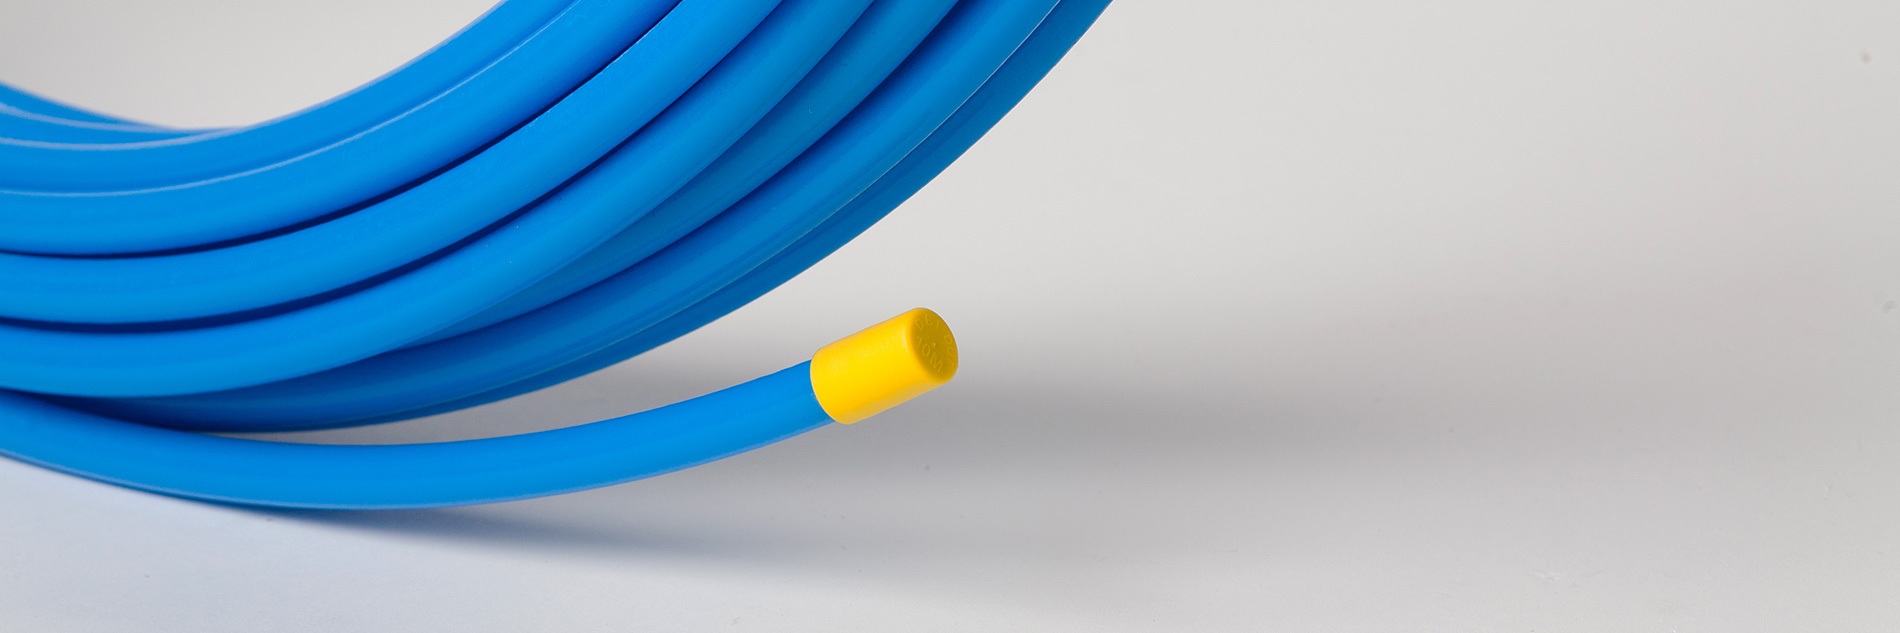 FLEXIRO polyethylene plastic pipe to retrofit an underfloor heating